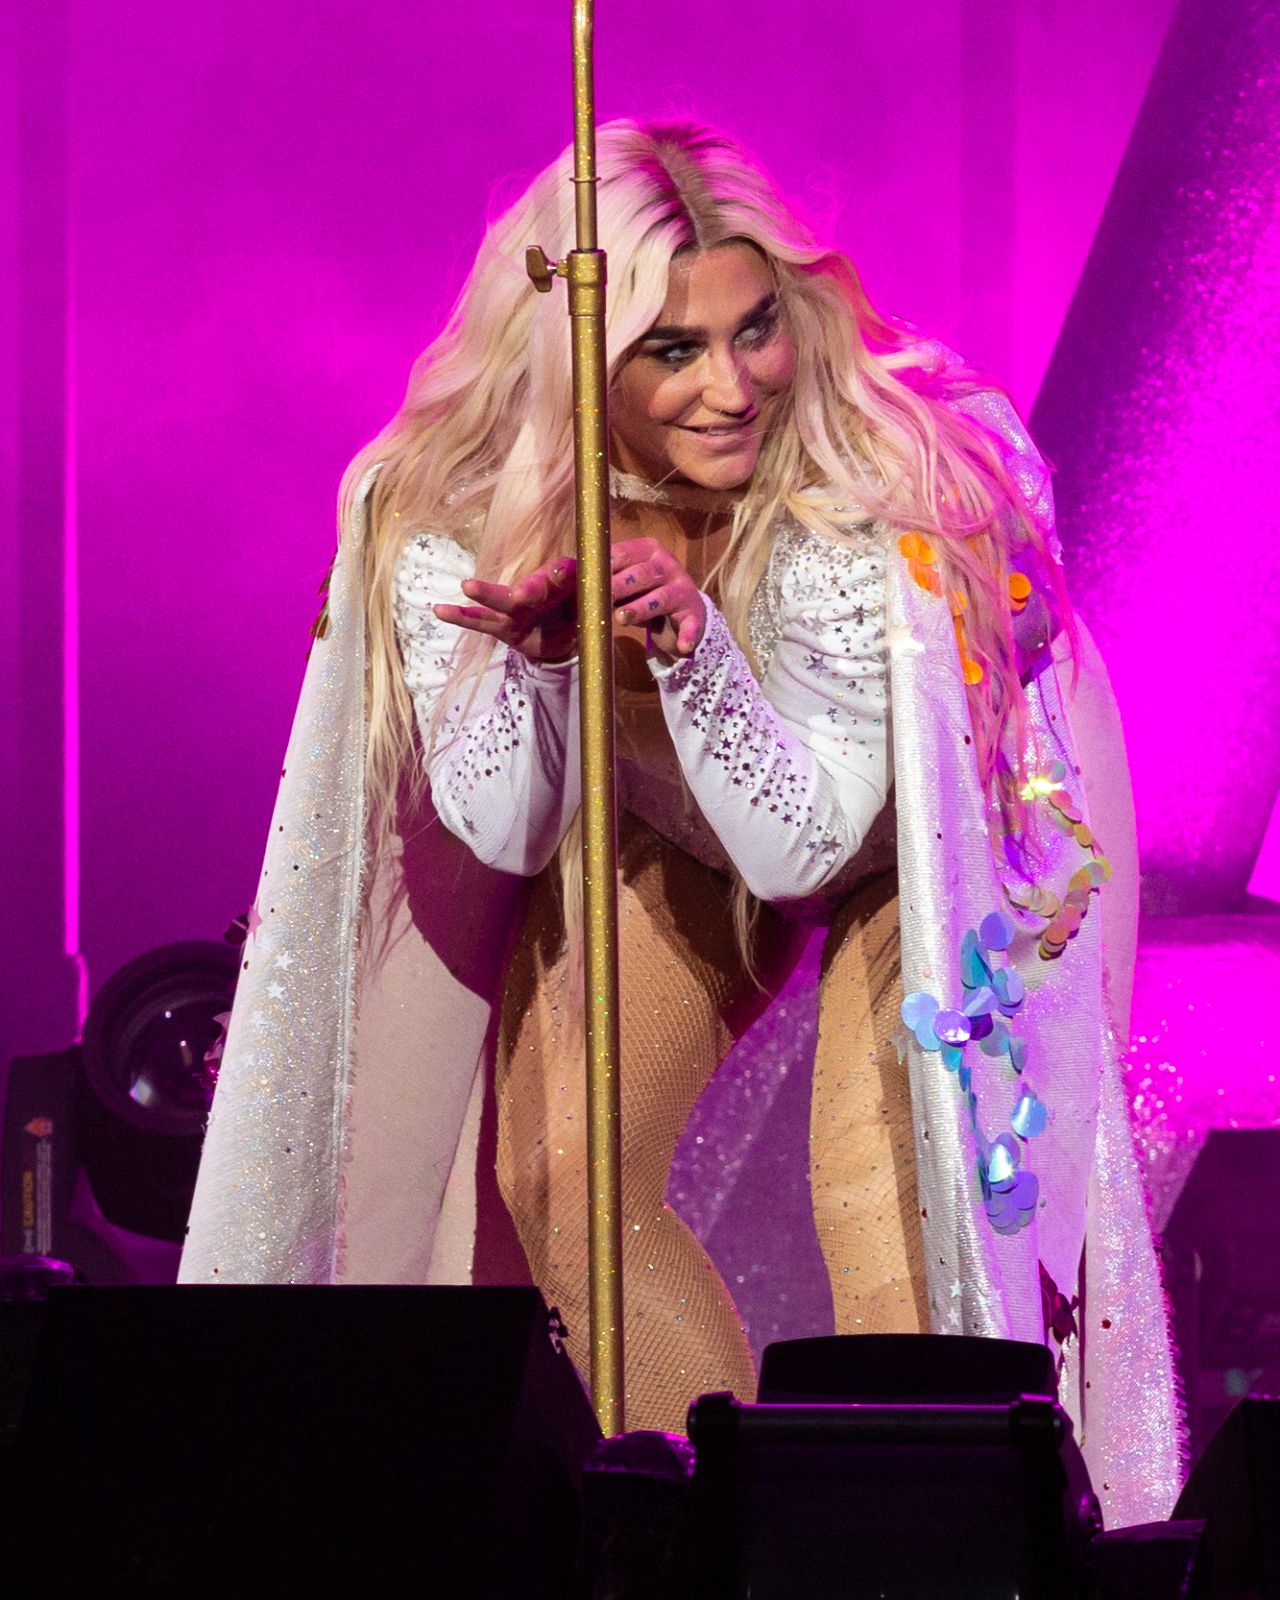 Kesha Performs - Concert in Noblesville 07/19/20181280 x 1600